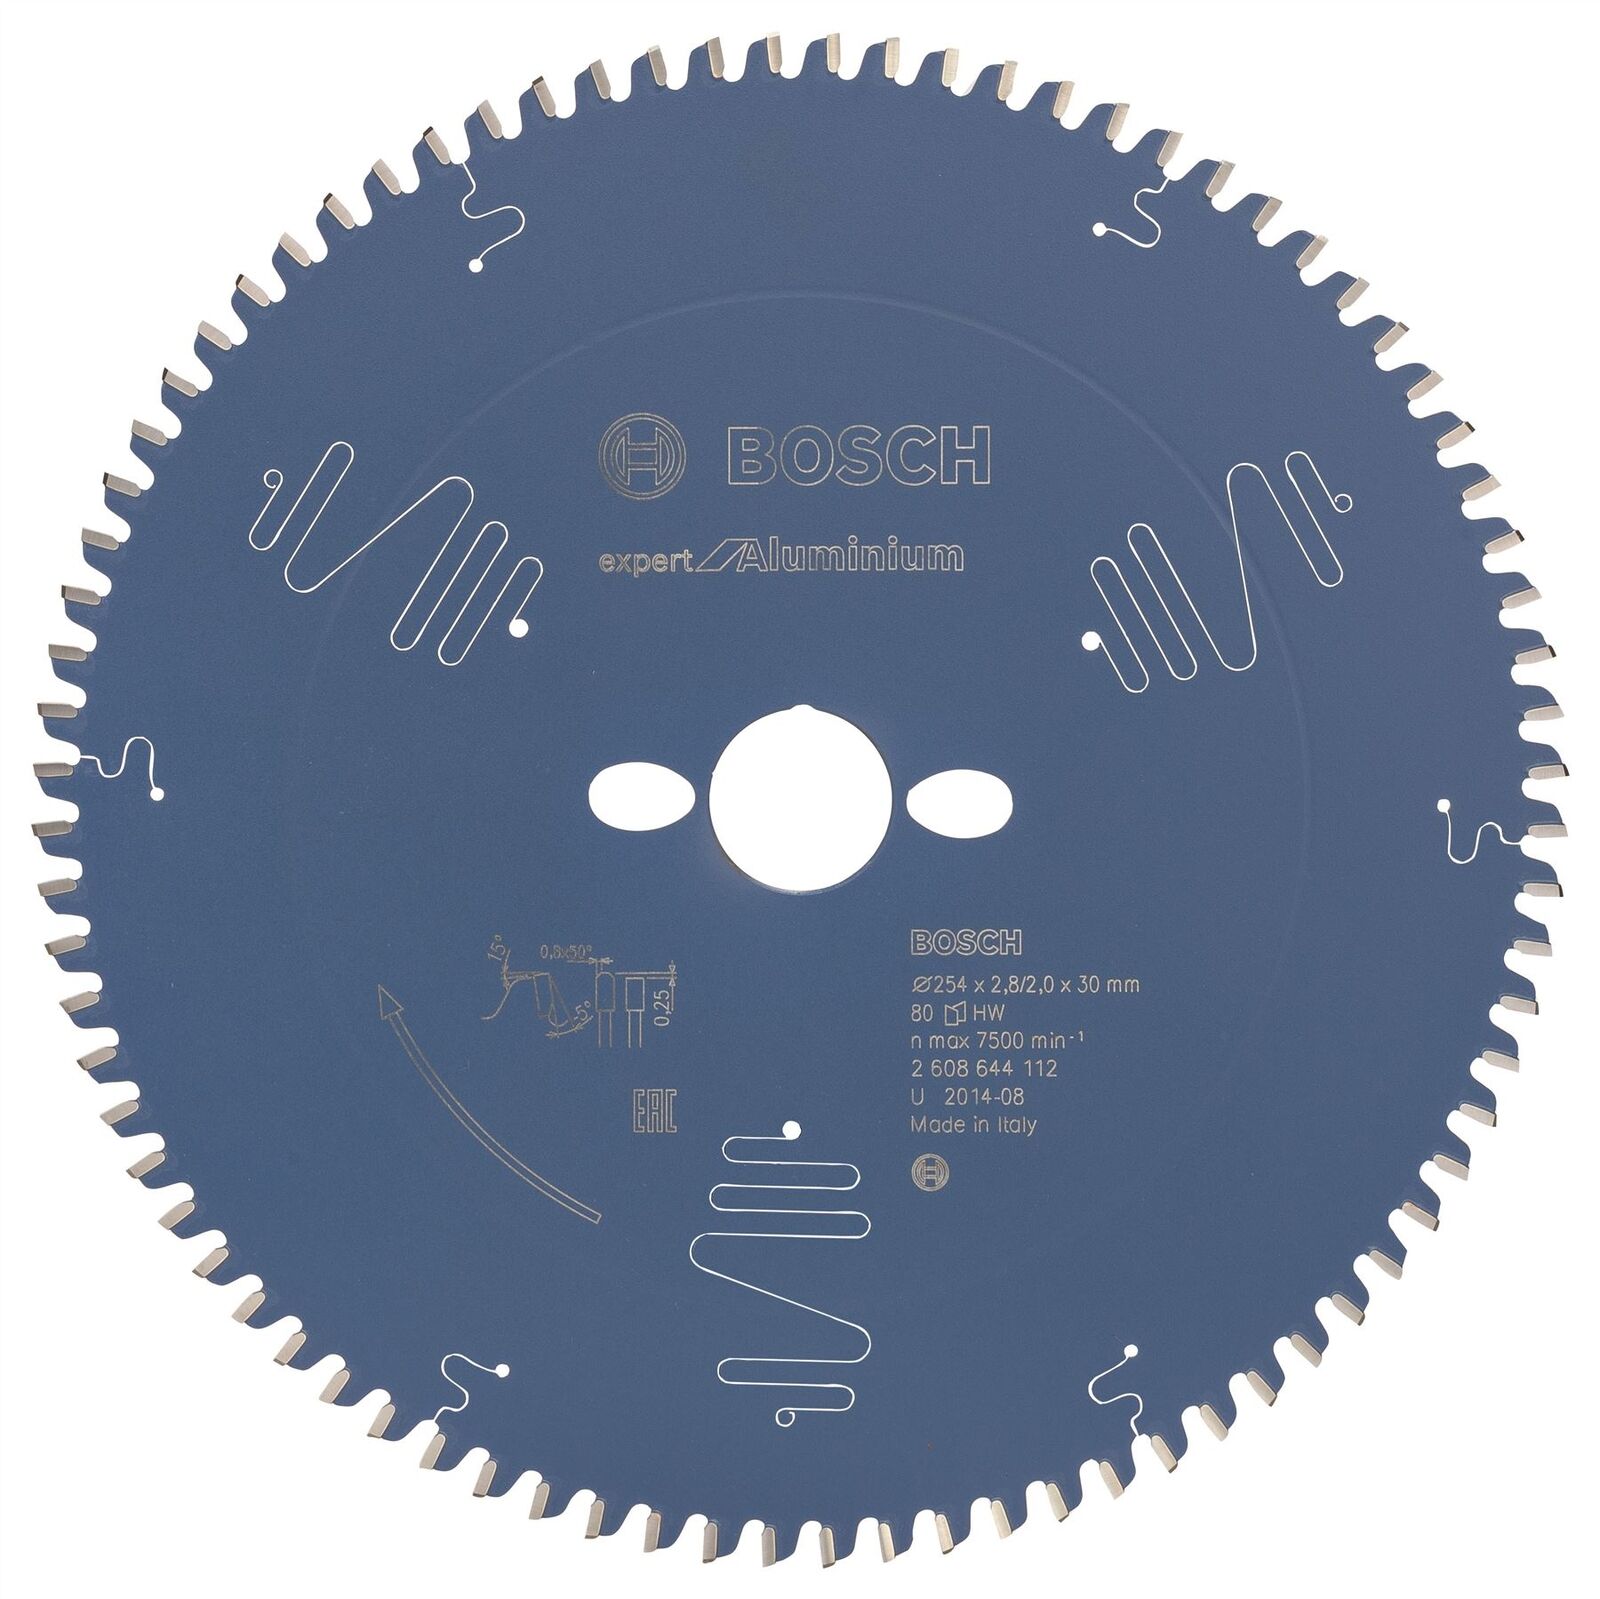 Bosch Expert Circular Saw Blade for Aluminium 254 x 30 x 2,8 mm, 80 2608644112 Power Tool Services